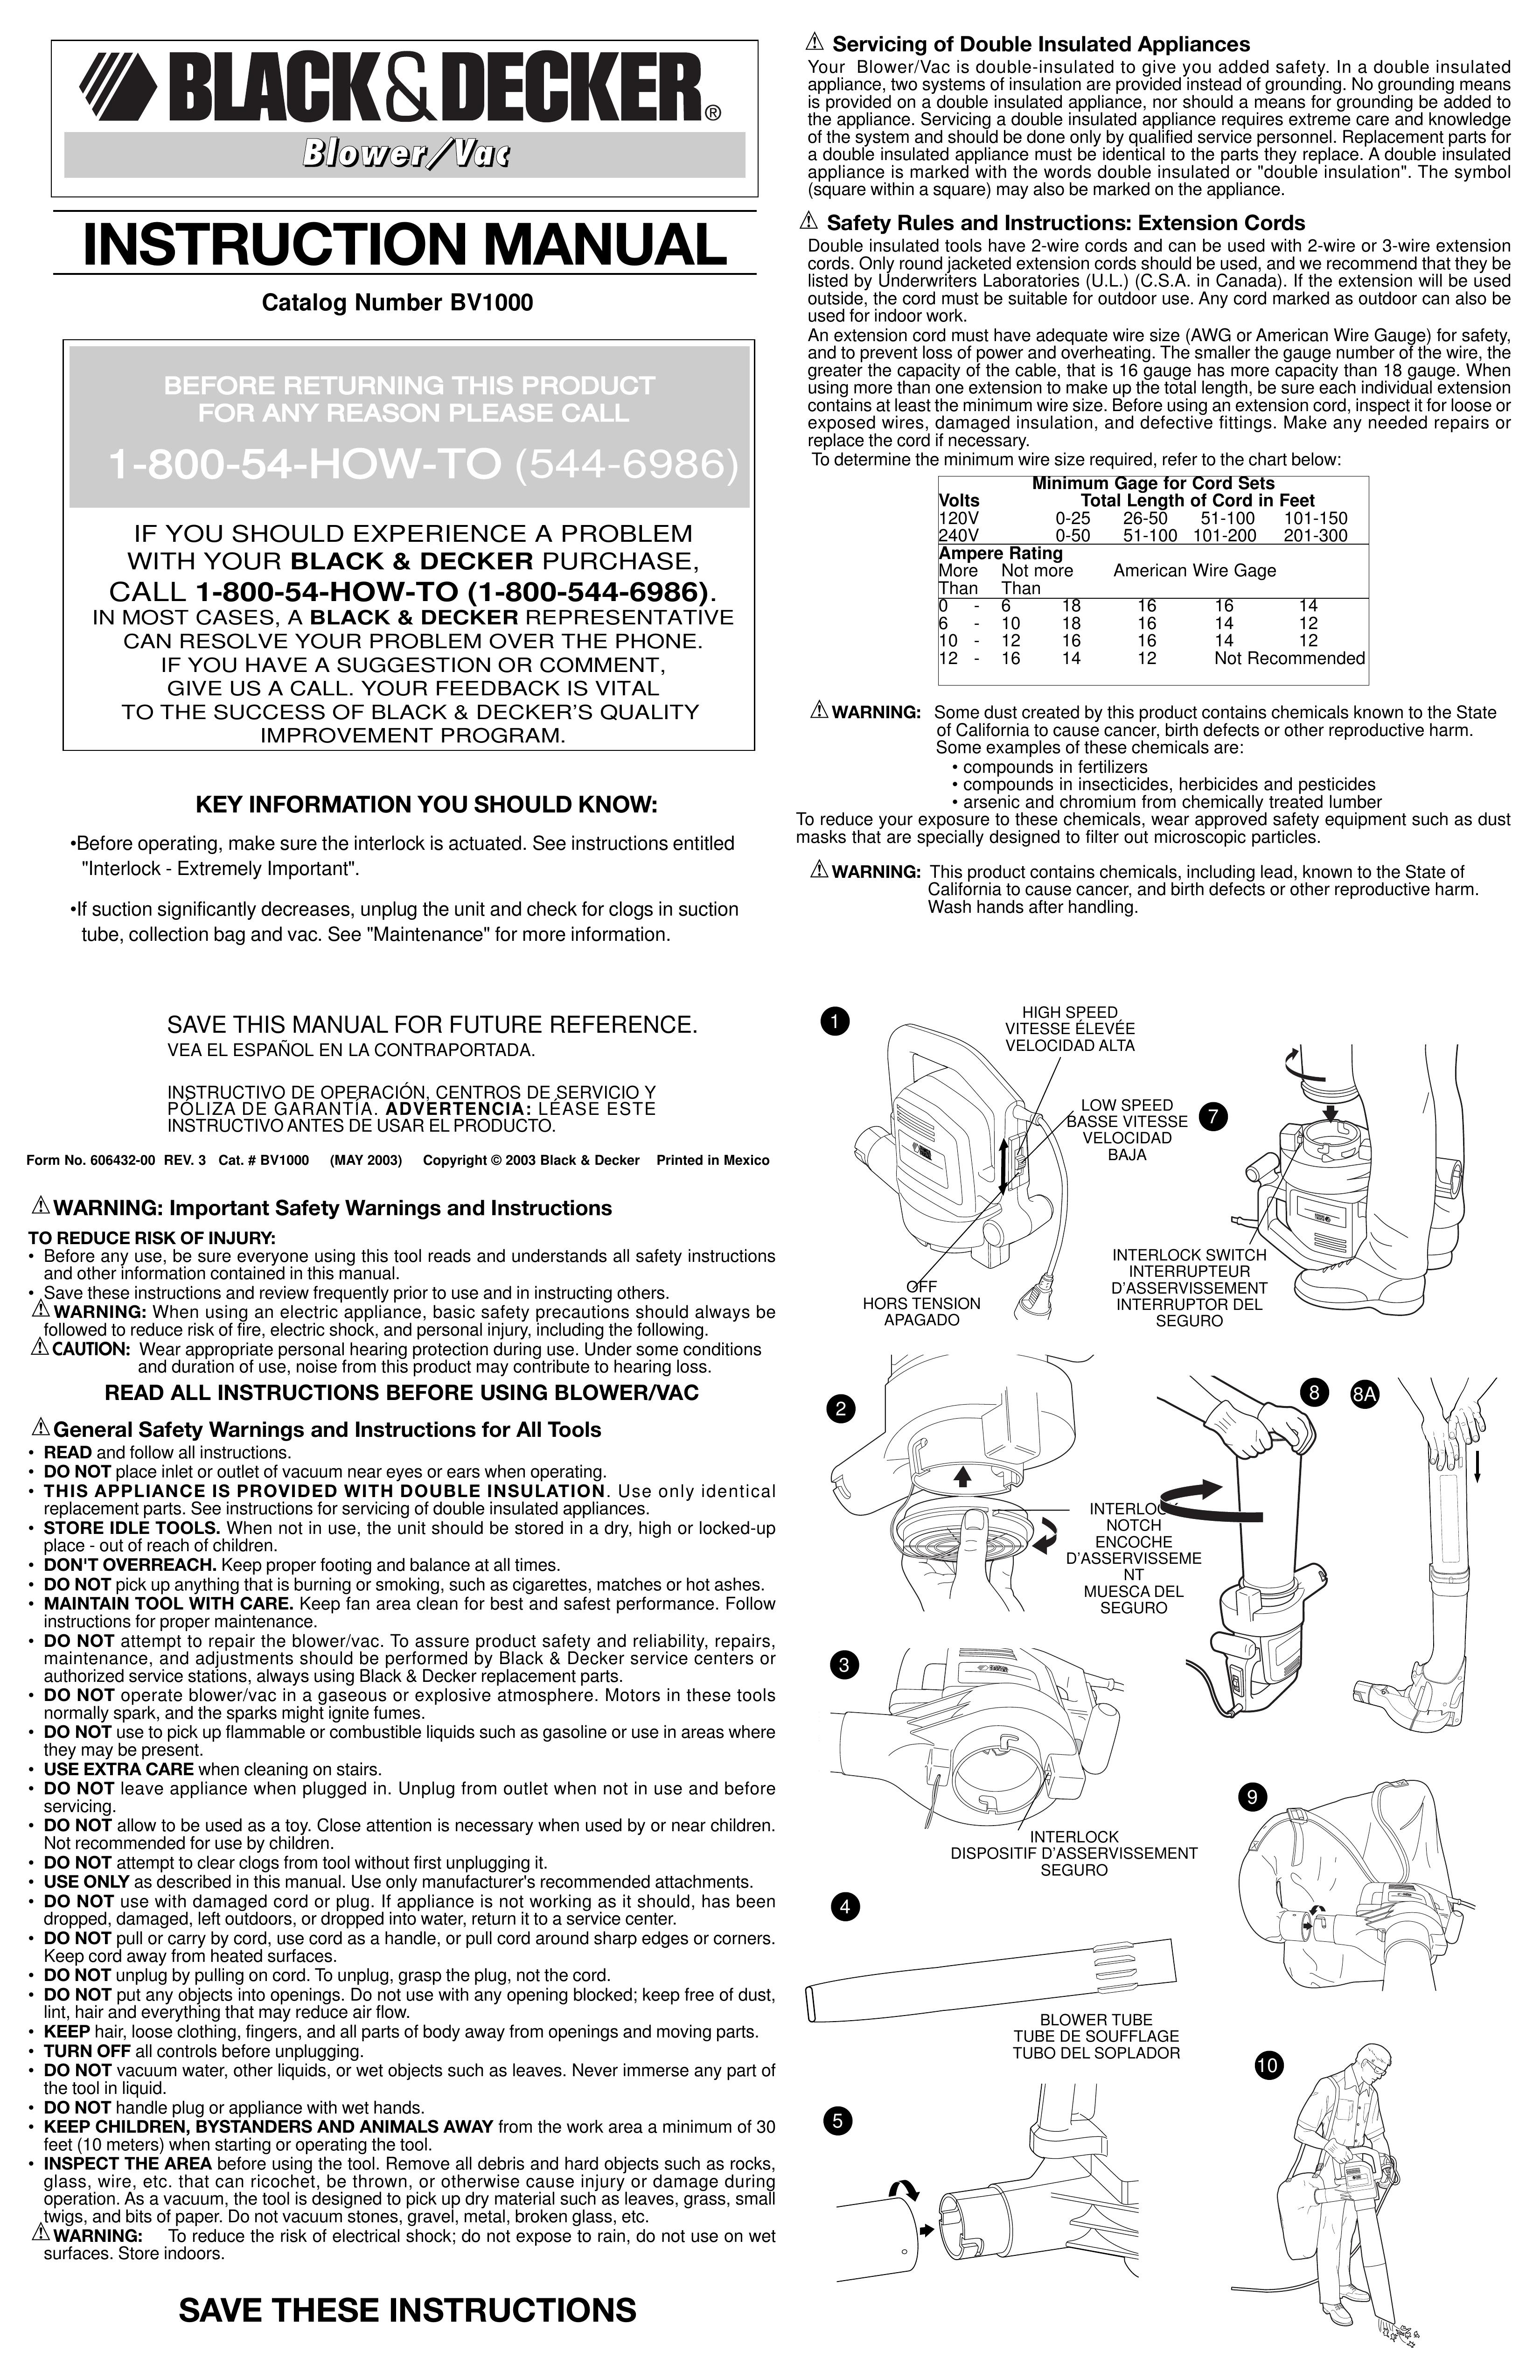 Black & Decker 606432-00 Blower User Manual